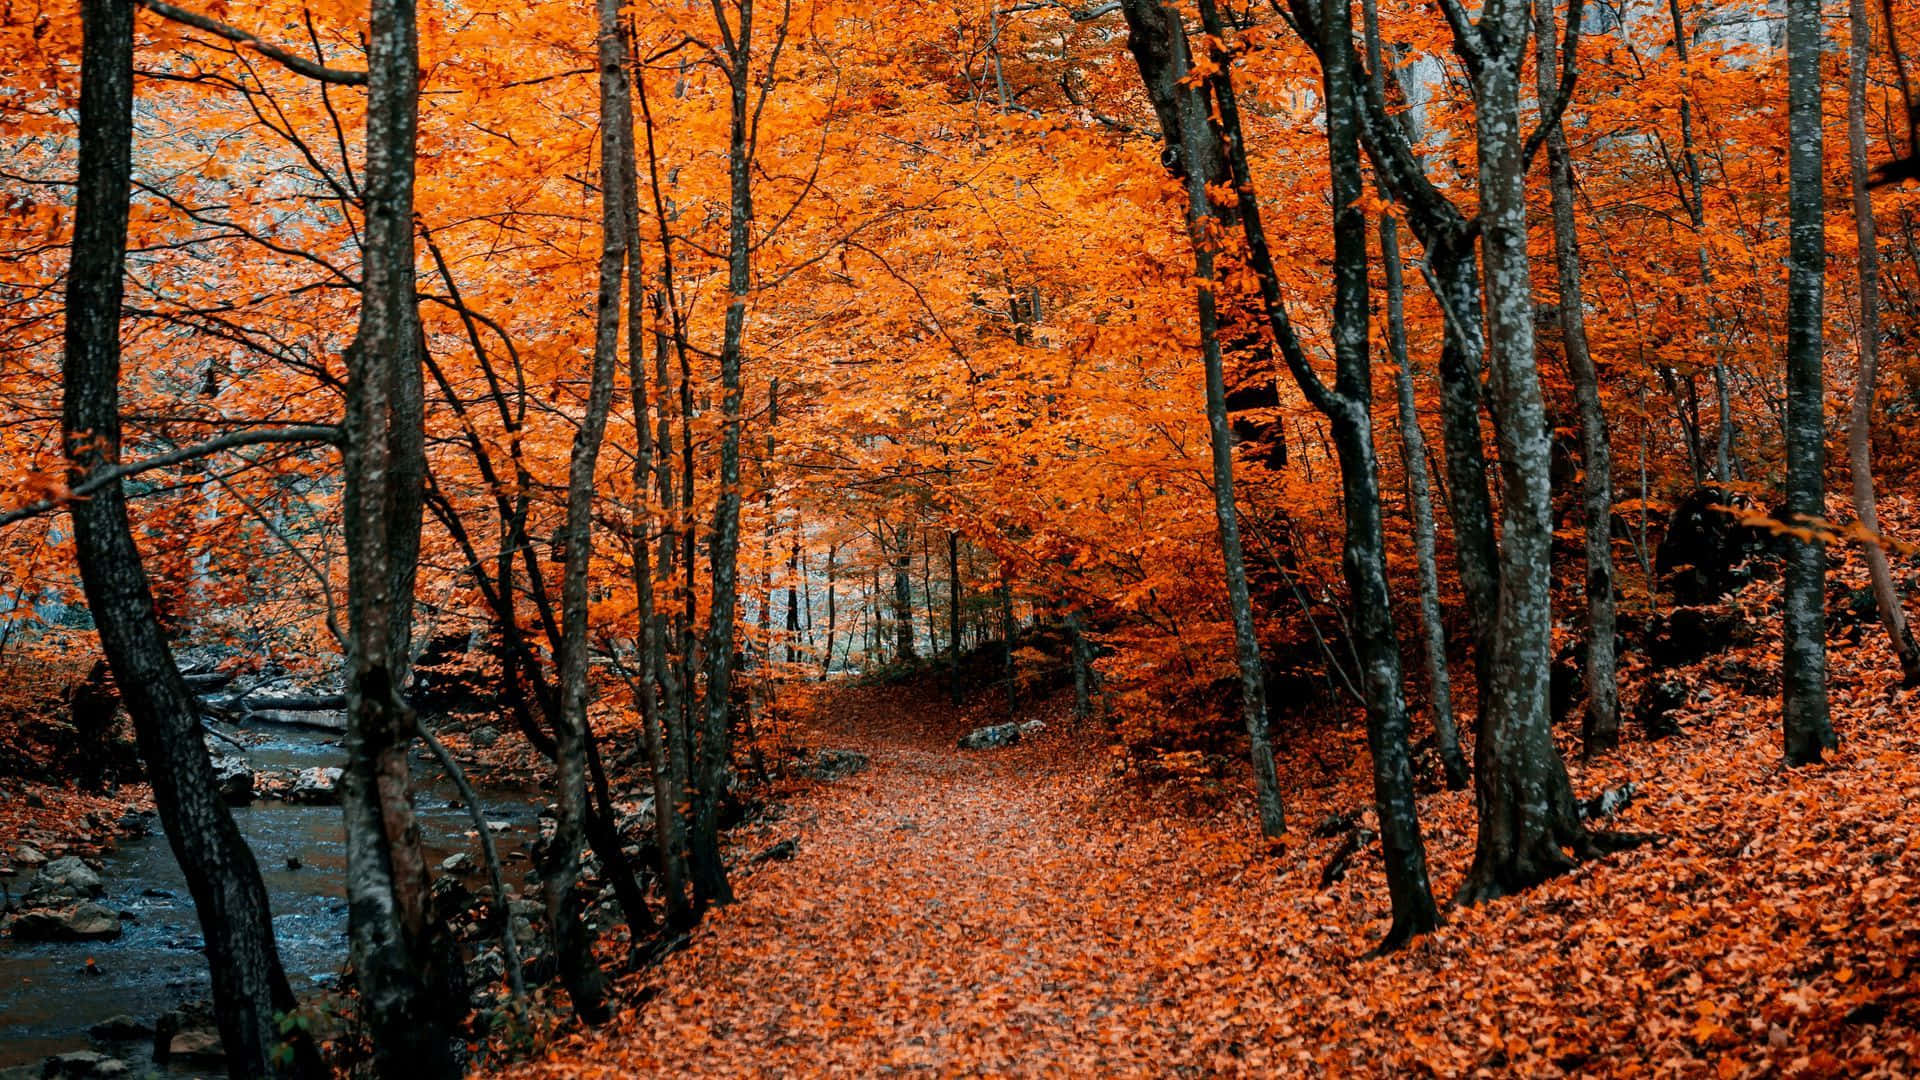 Stunning Autumn Scenery in High Resolution